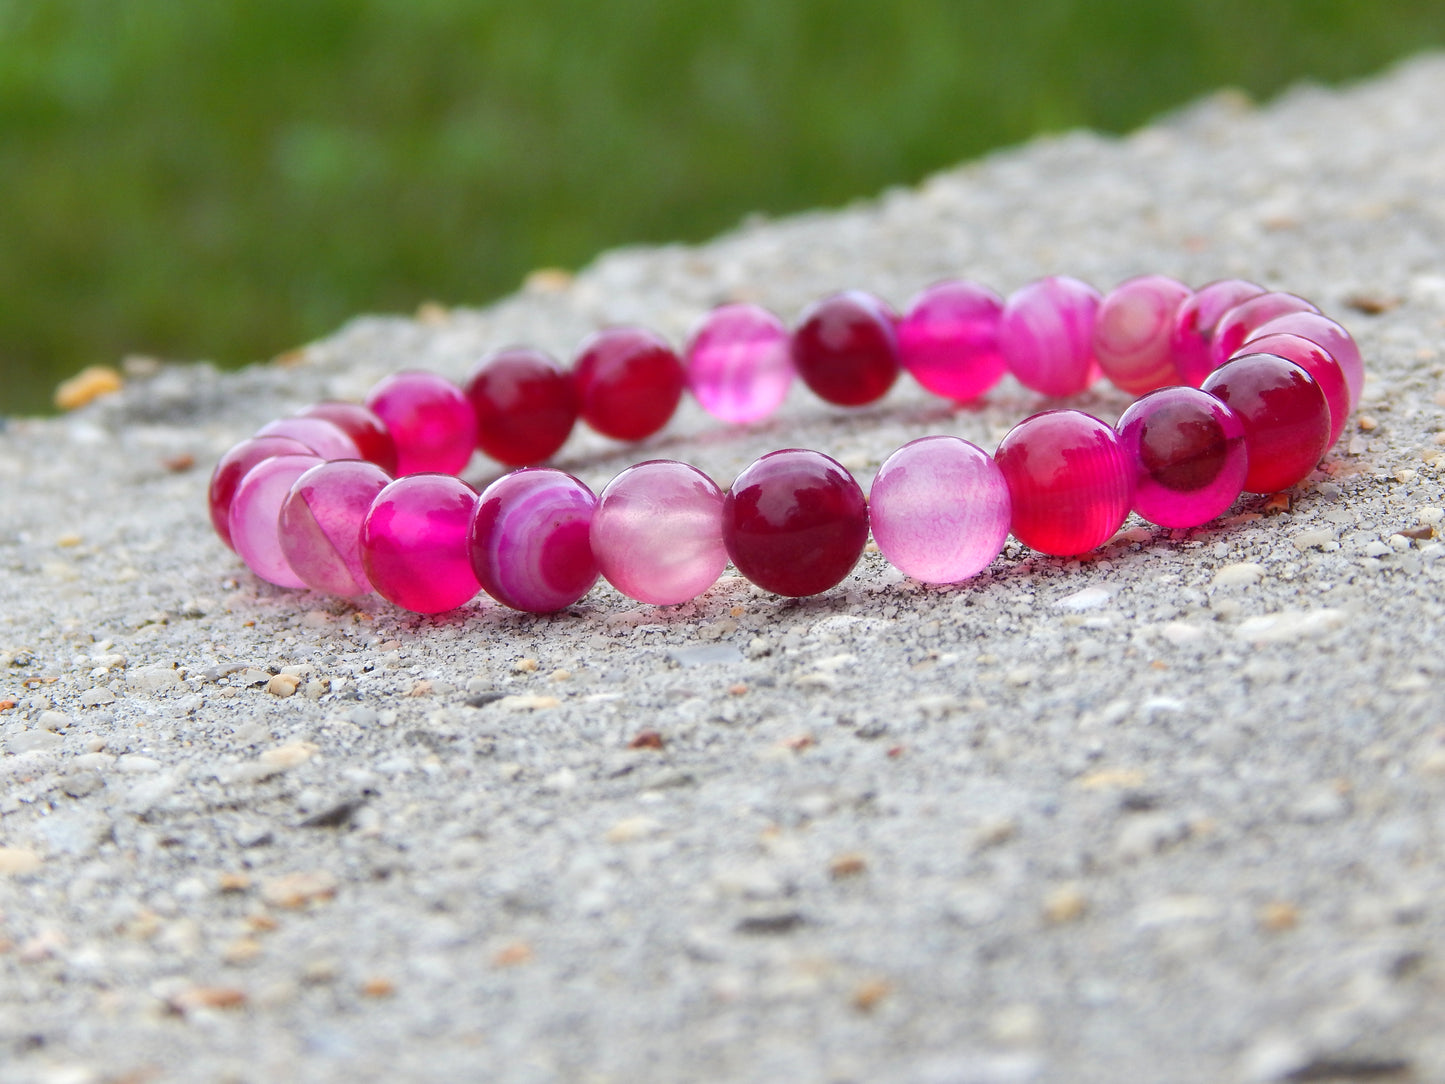 Pink agate stretch bracelet